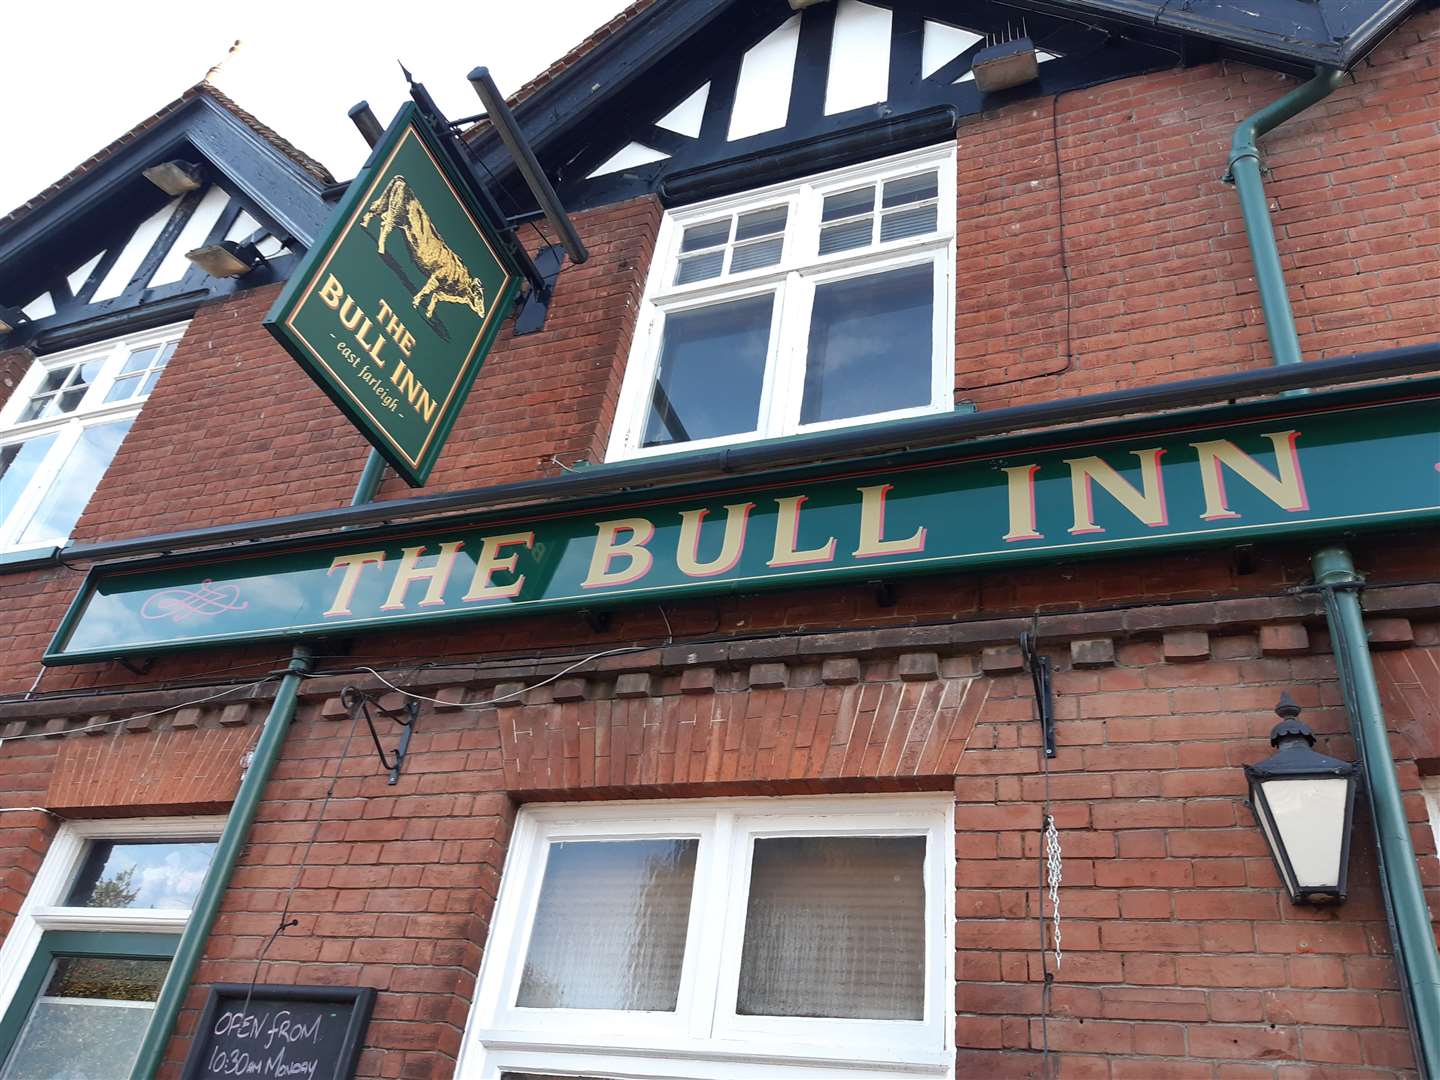 The Bull Inn, East Farleigh, is closed